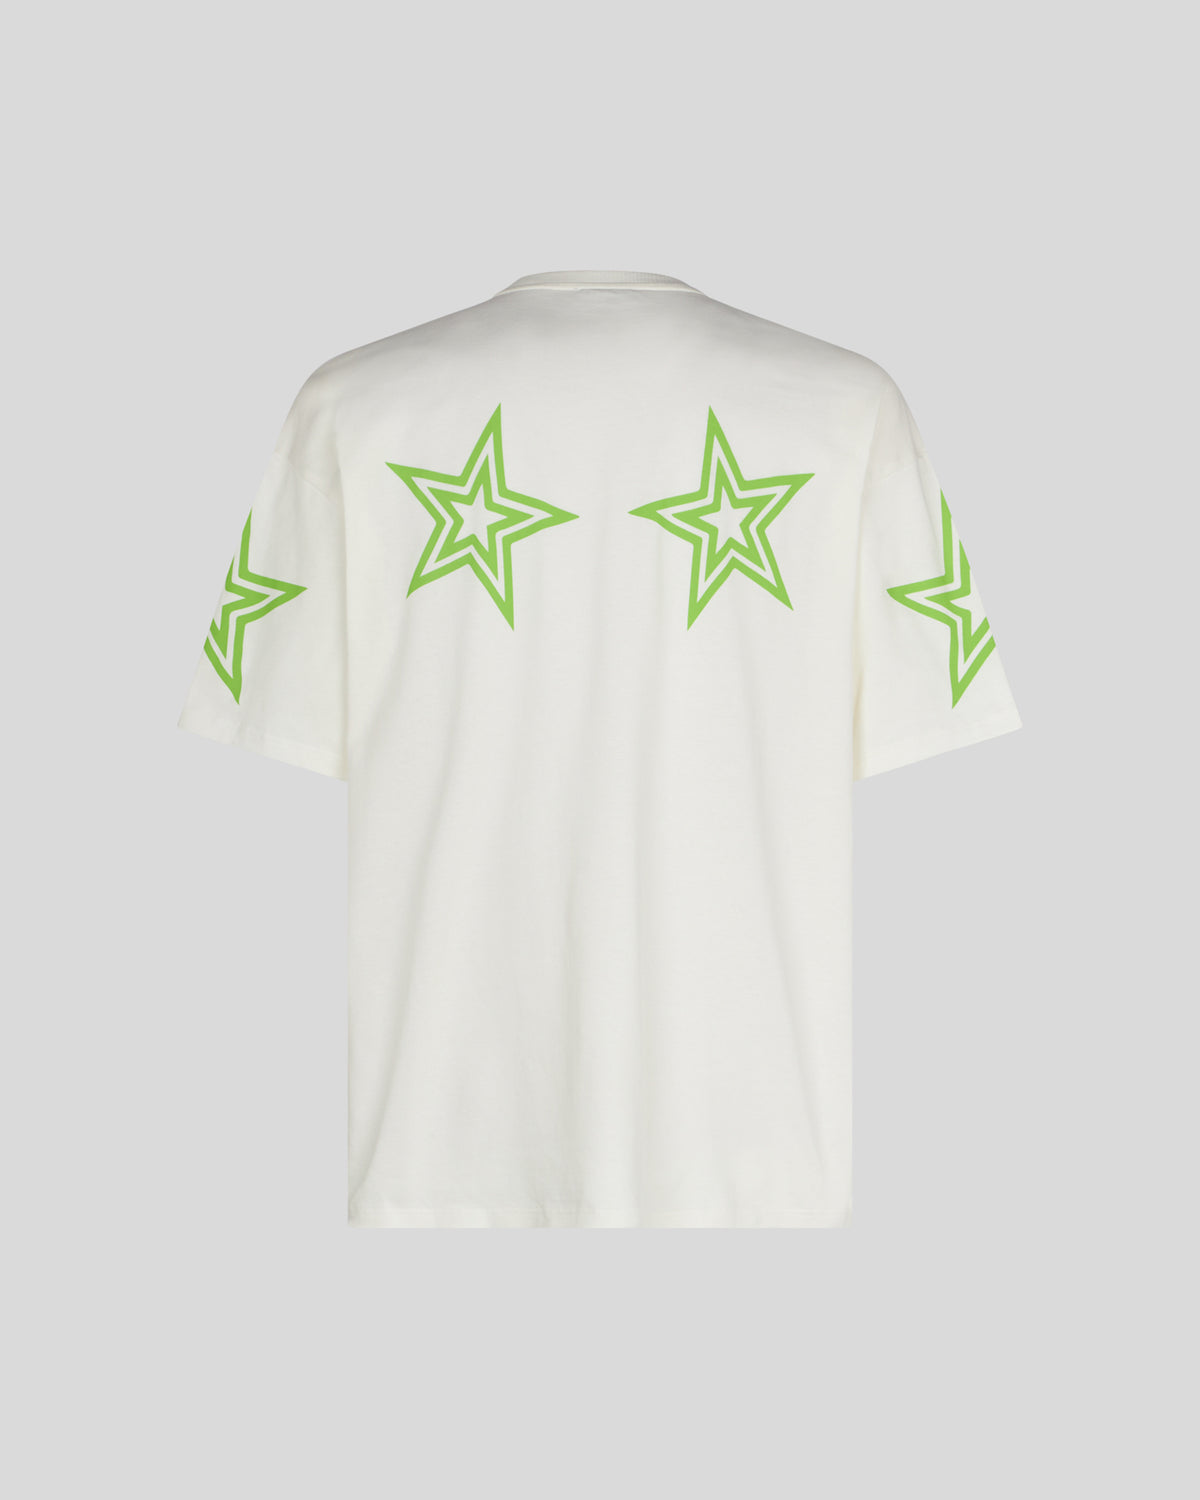 PHOBIA WHITE T-SHIRT WITH GREEN STARS PRINT